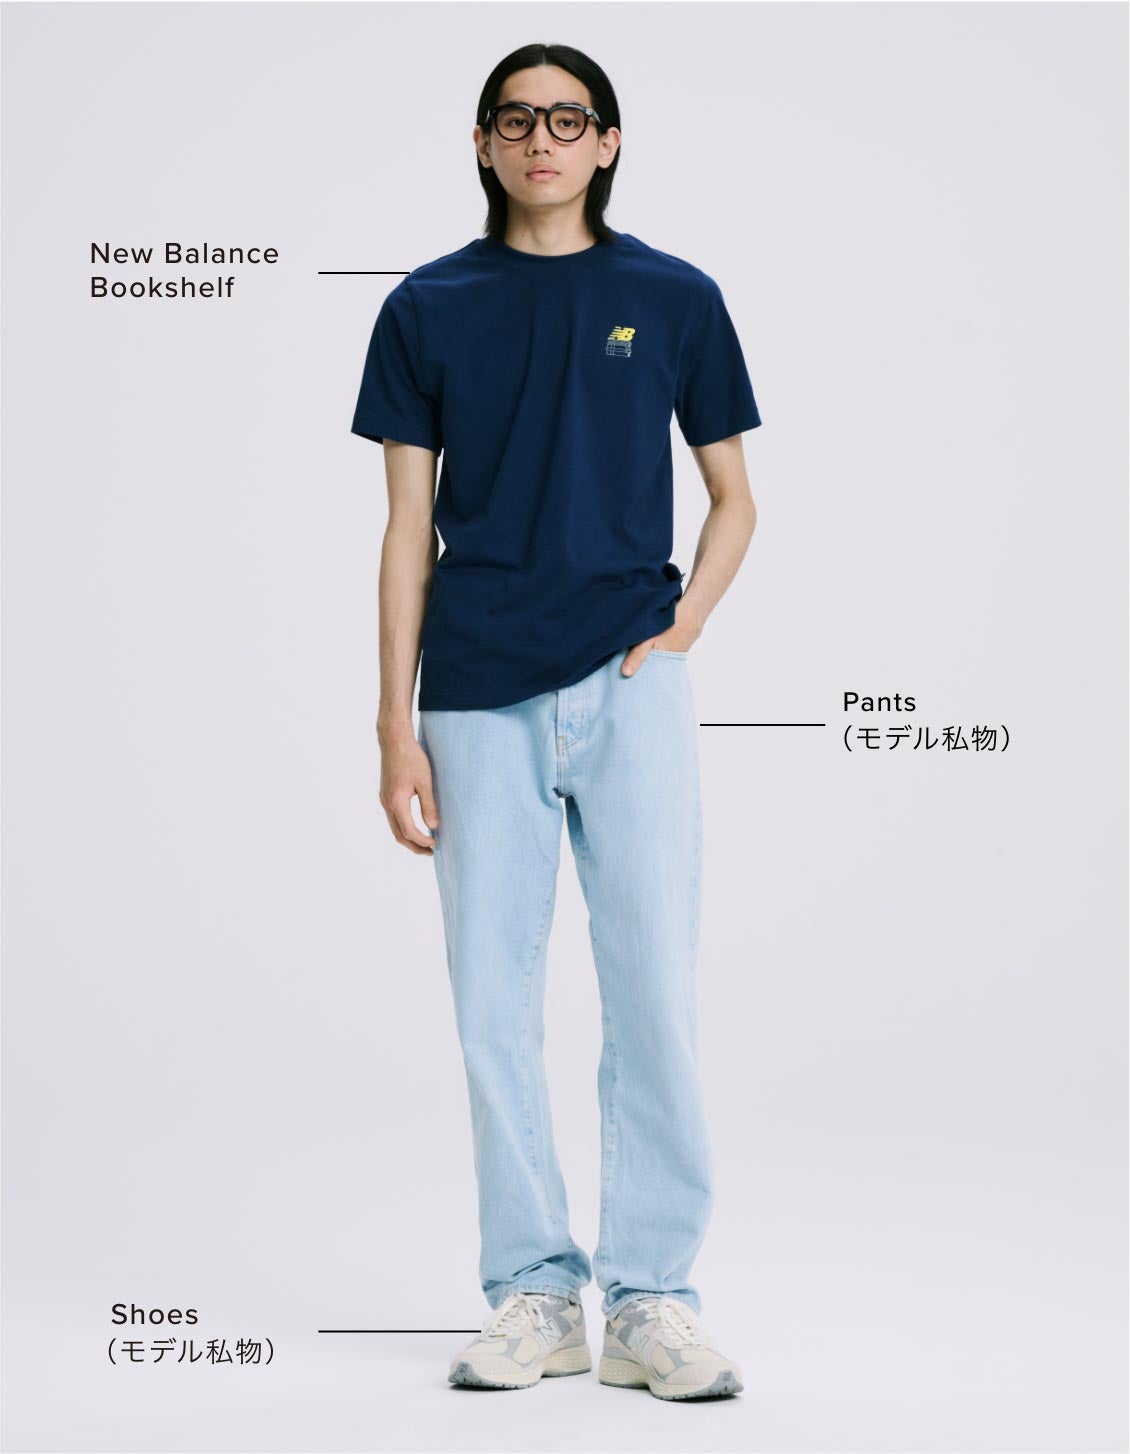 Takuma Endo コーディネート詳細 Tシャツ:New Balance Bookshelf, Pants:モデル私物, Shoes:モデル私物